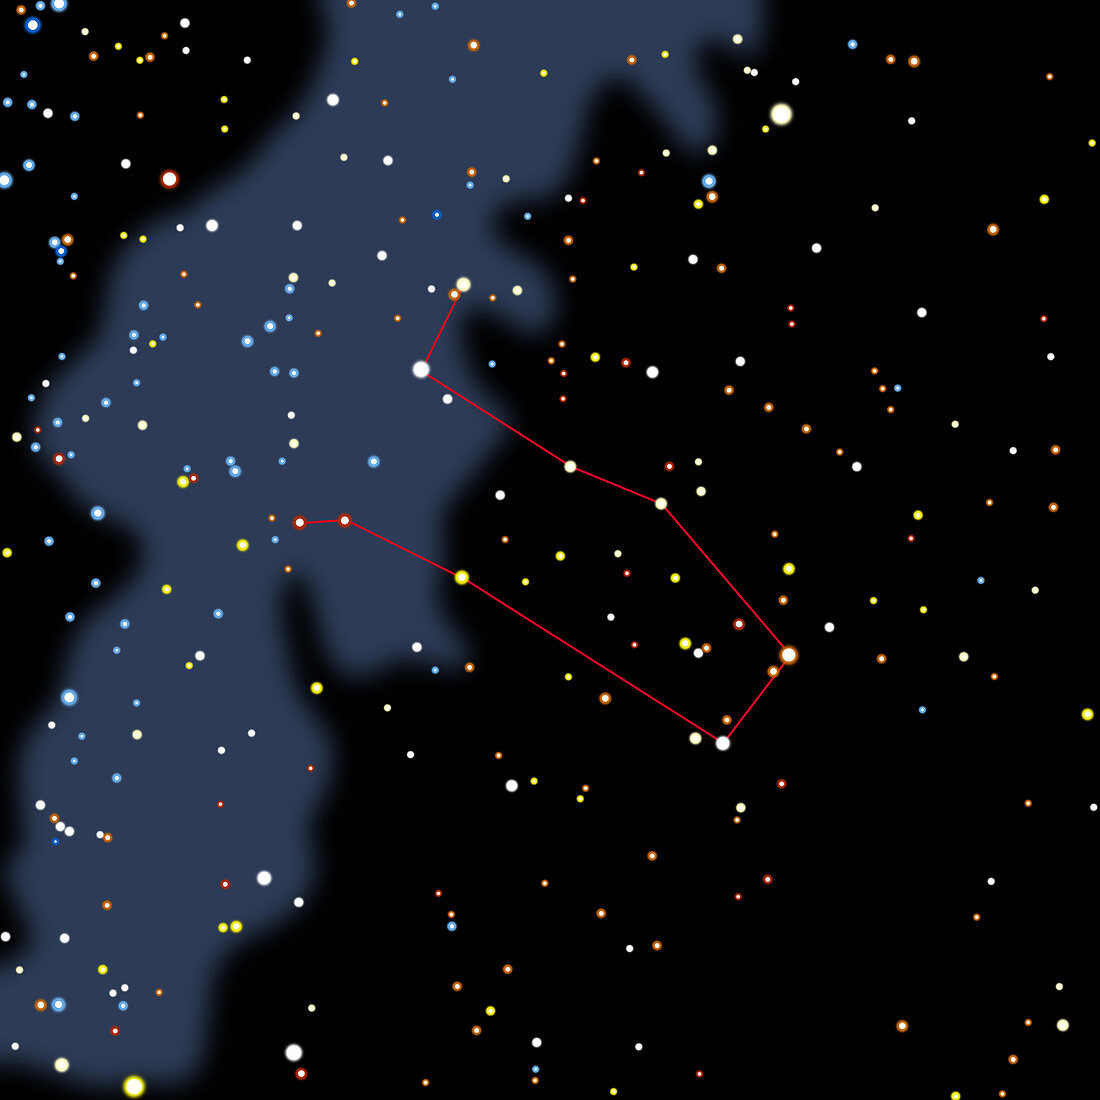 Computer artwork of the constellation of Gemini